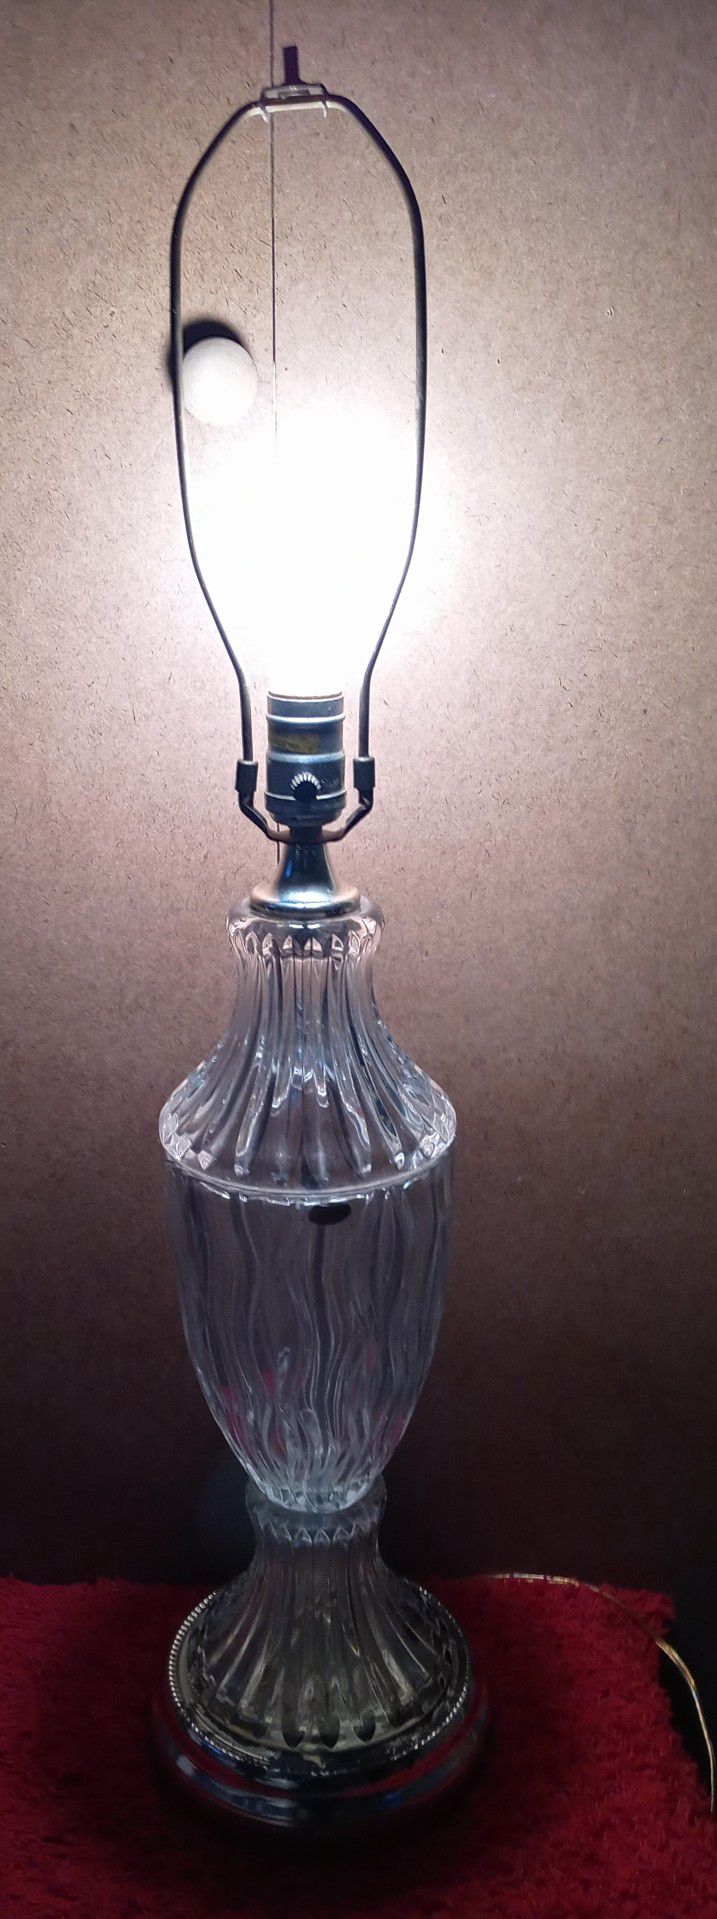 Kensington Crystal Lamp -$20 MPU